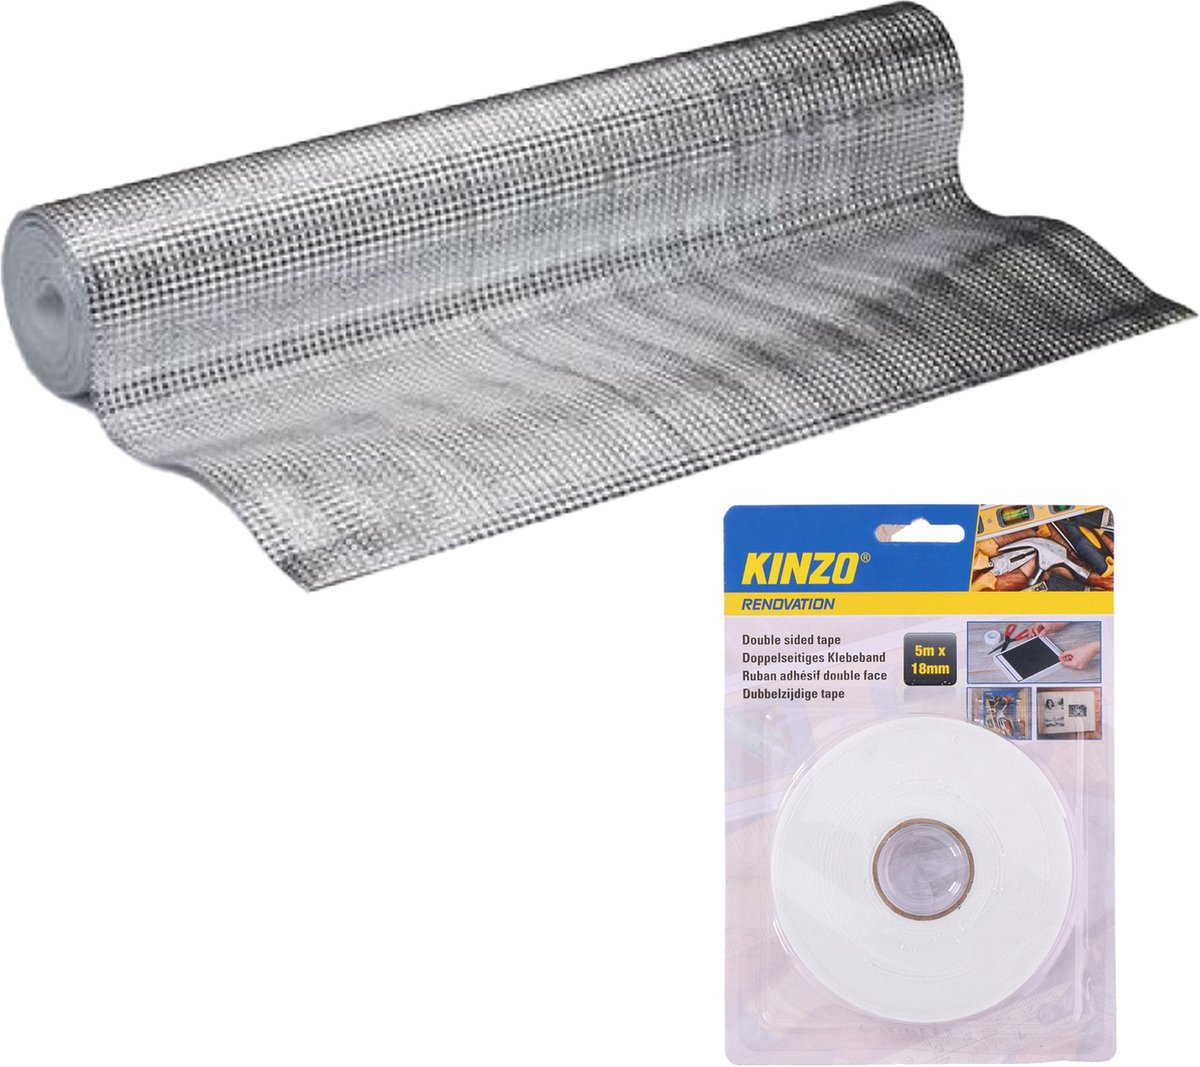 Kinzo Radiatorfolie met bevestiging tape - 250 x 50 cm - aluminium - energiebesparende isolatiefolie